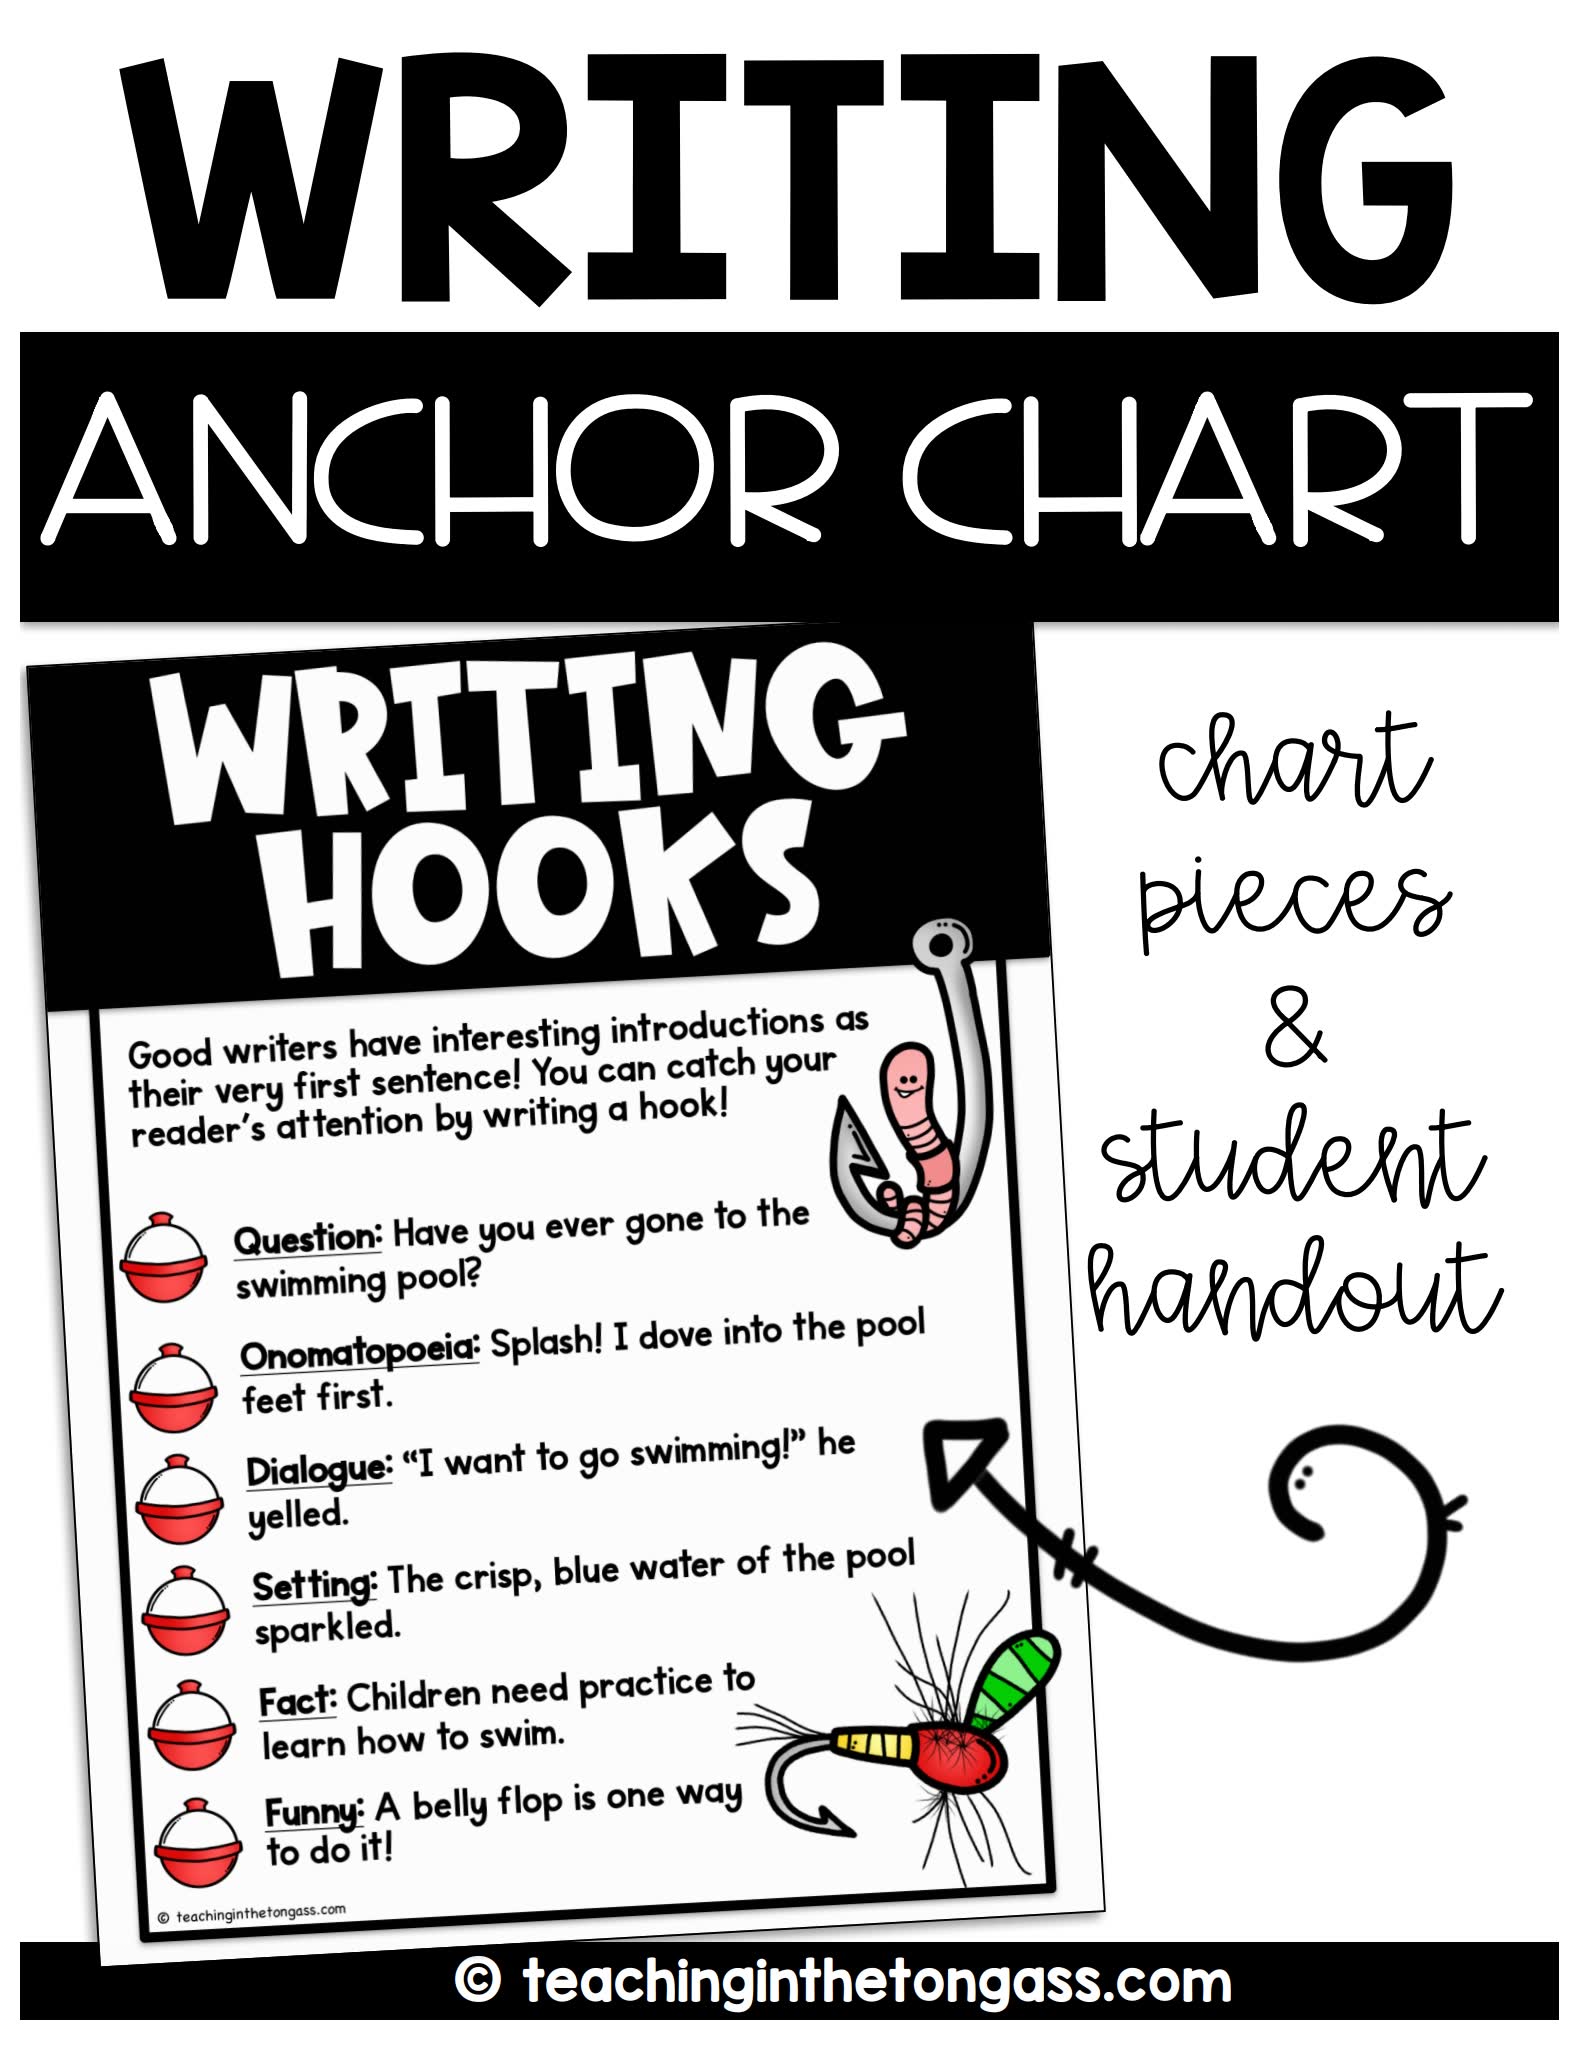 《Writing-Anchor-Chart》写作技巧英文海报26册